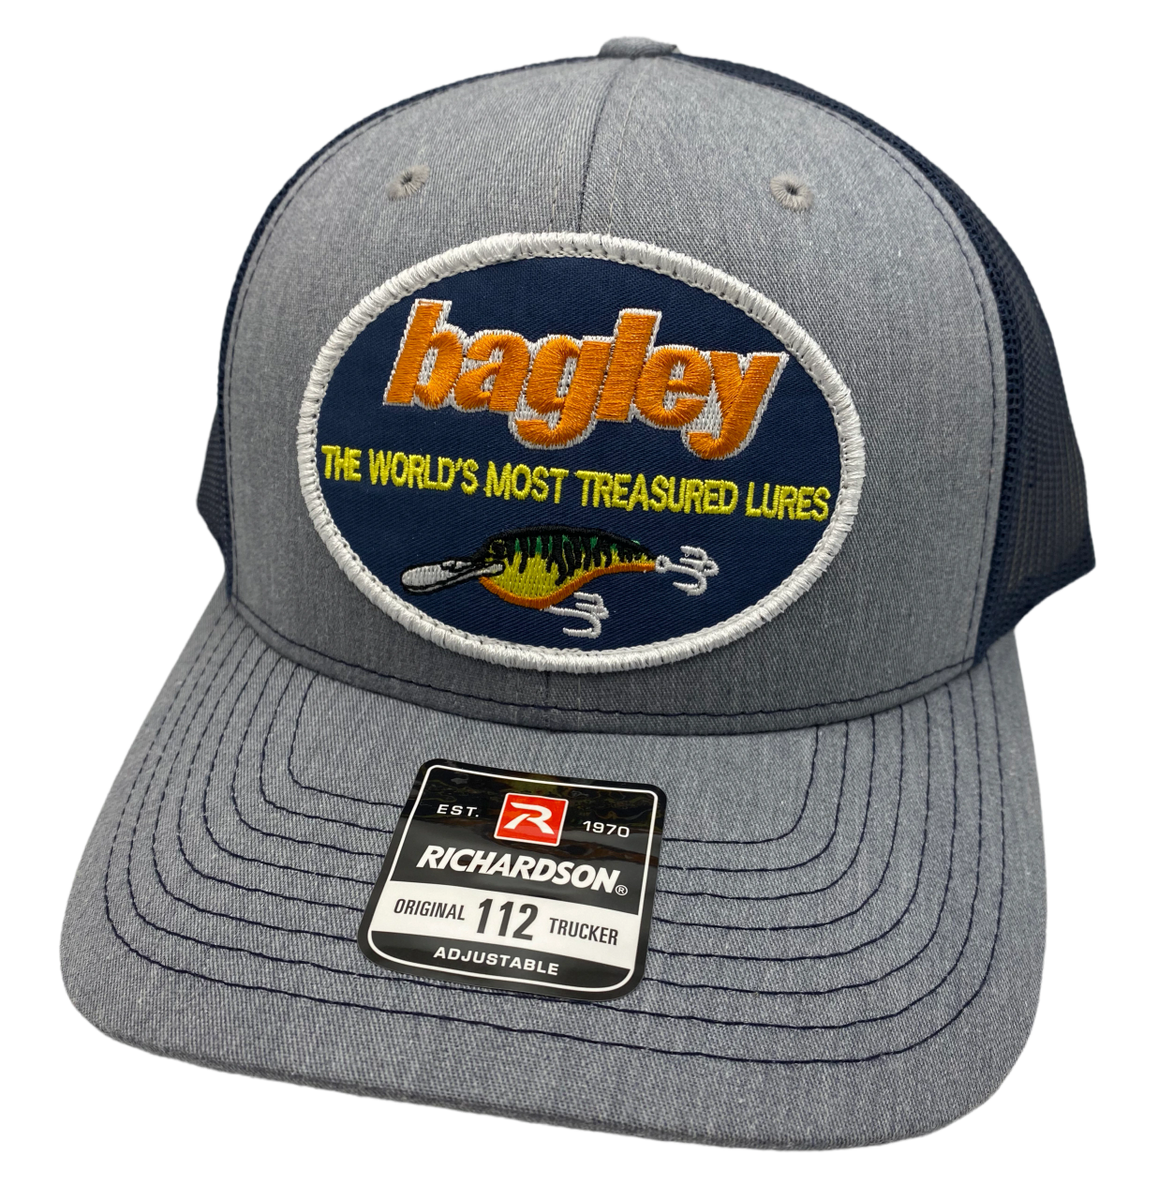 Bagley Lures Gray/Navy Hat